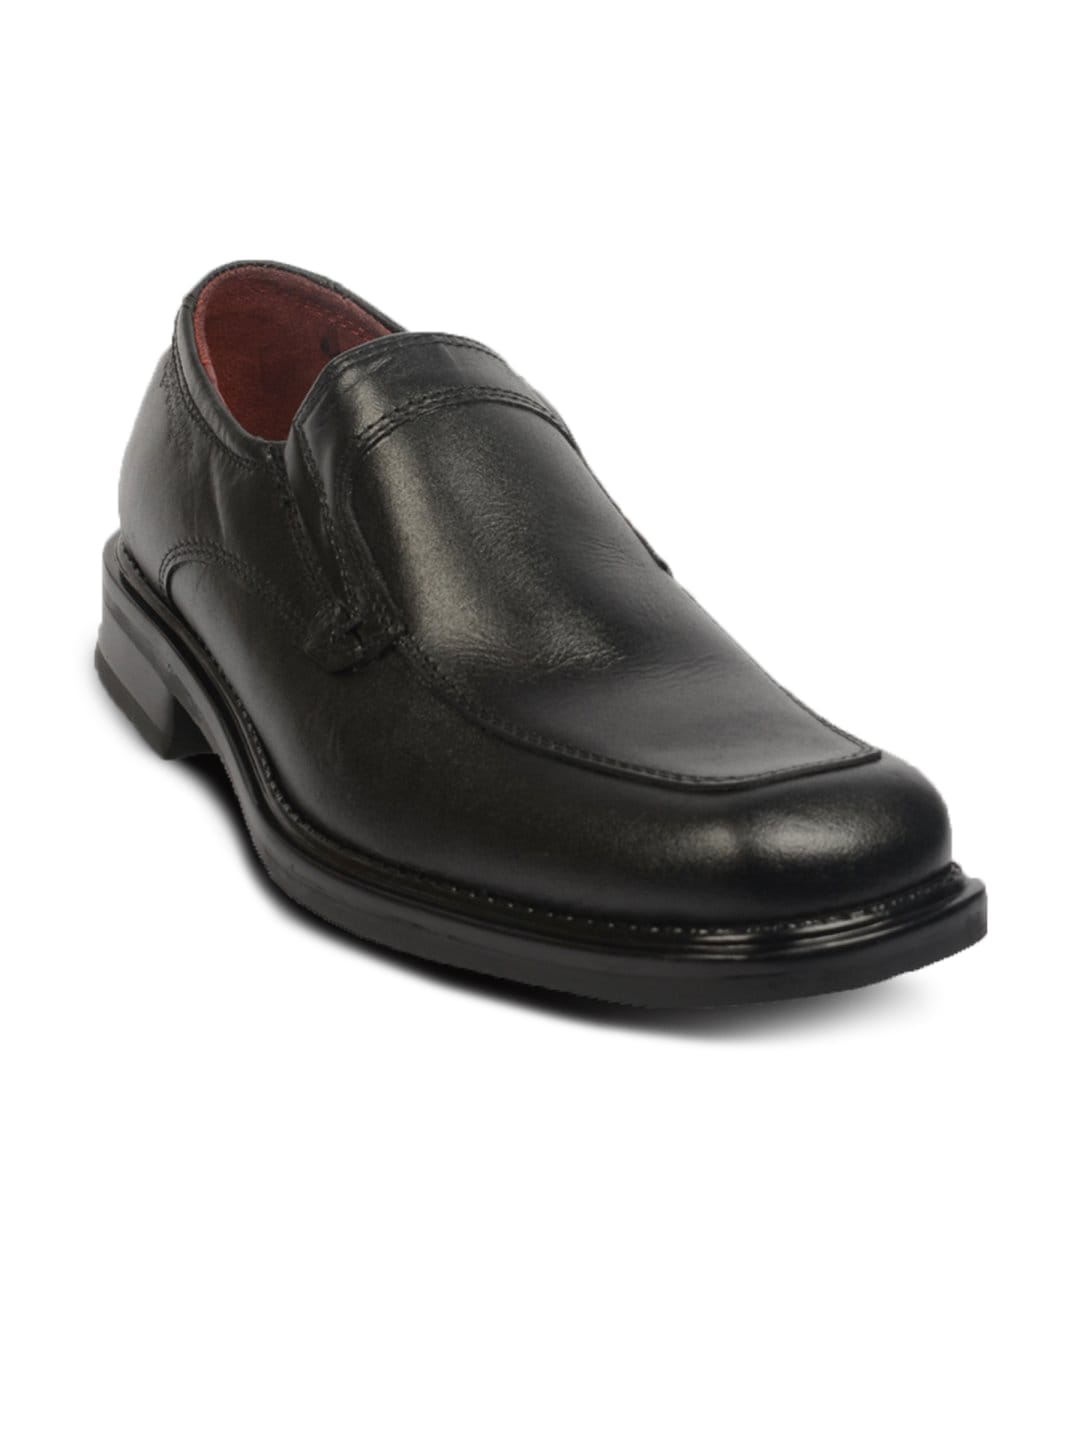 Provogue Men's Panther Black Shoe